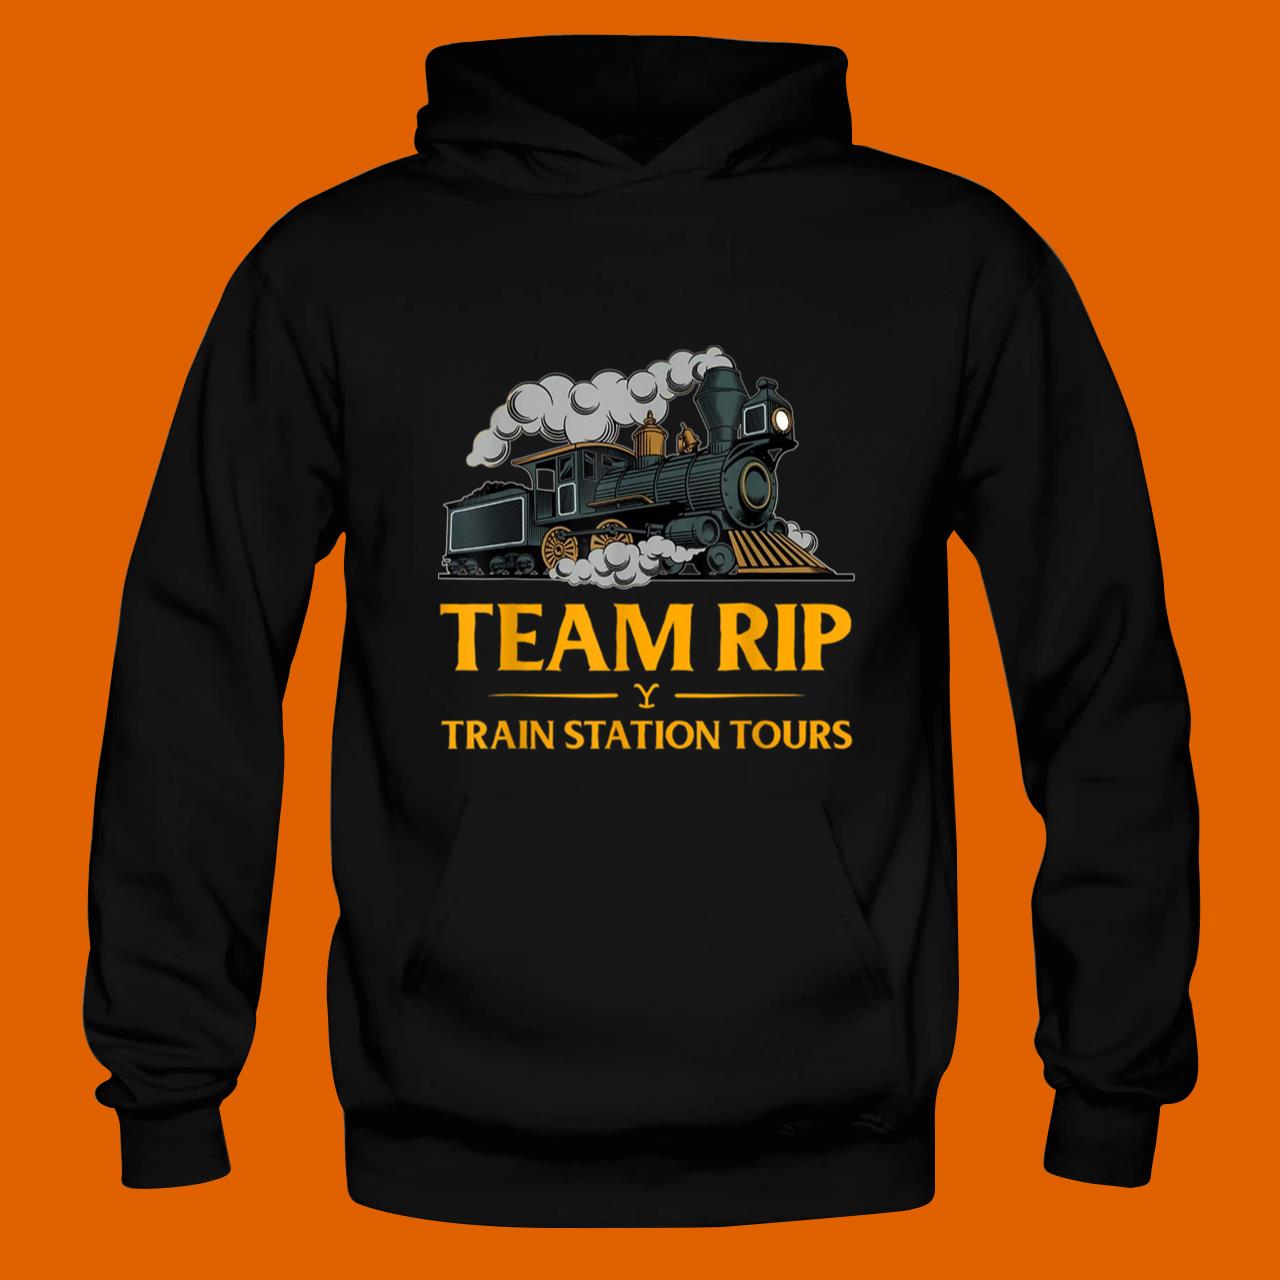 Team-Rip Train Station Tours Yellowstone T-Shirt Sticker